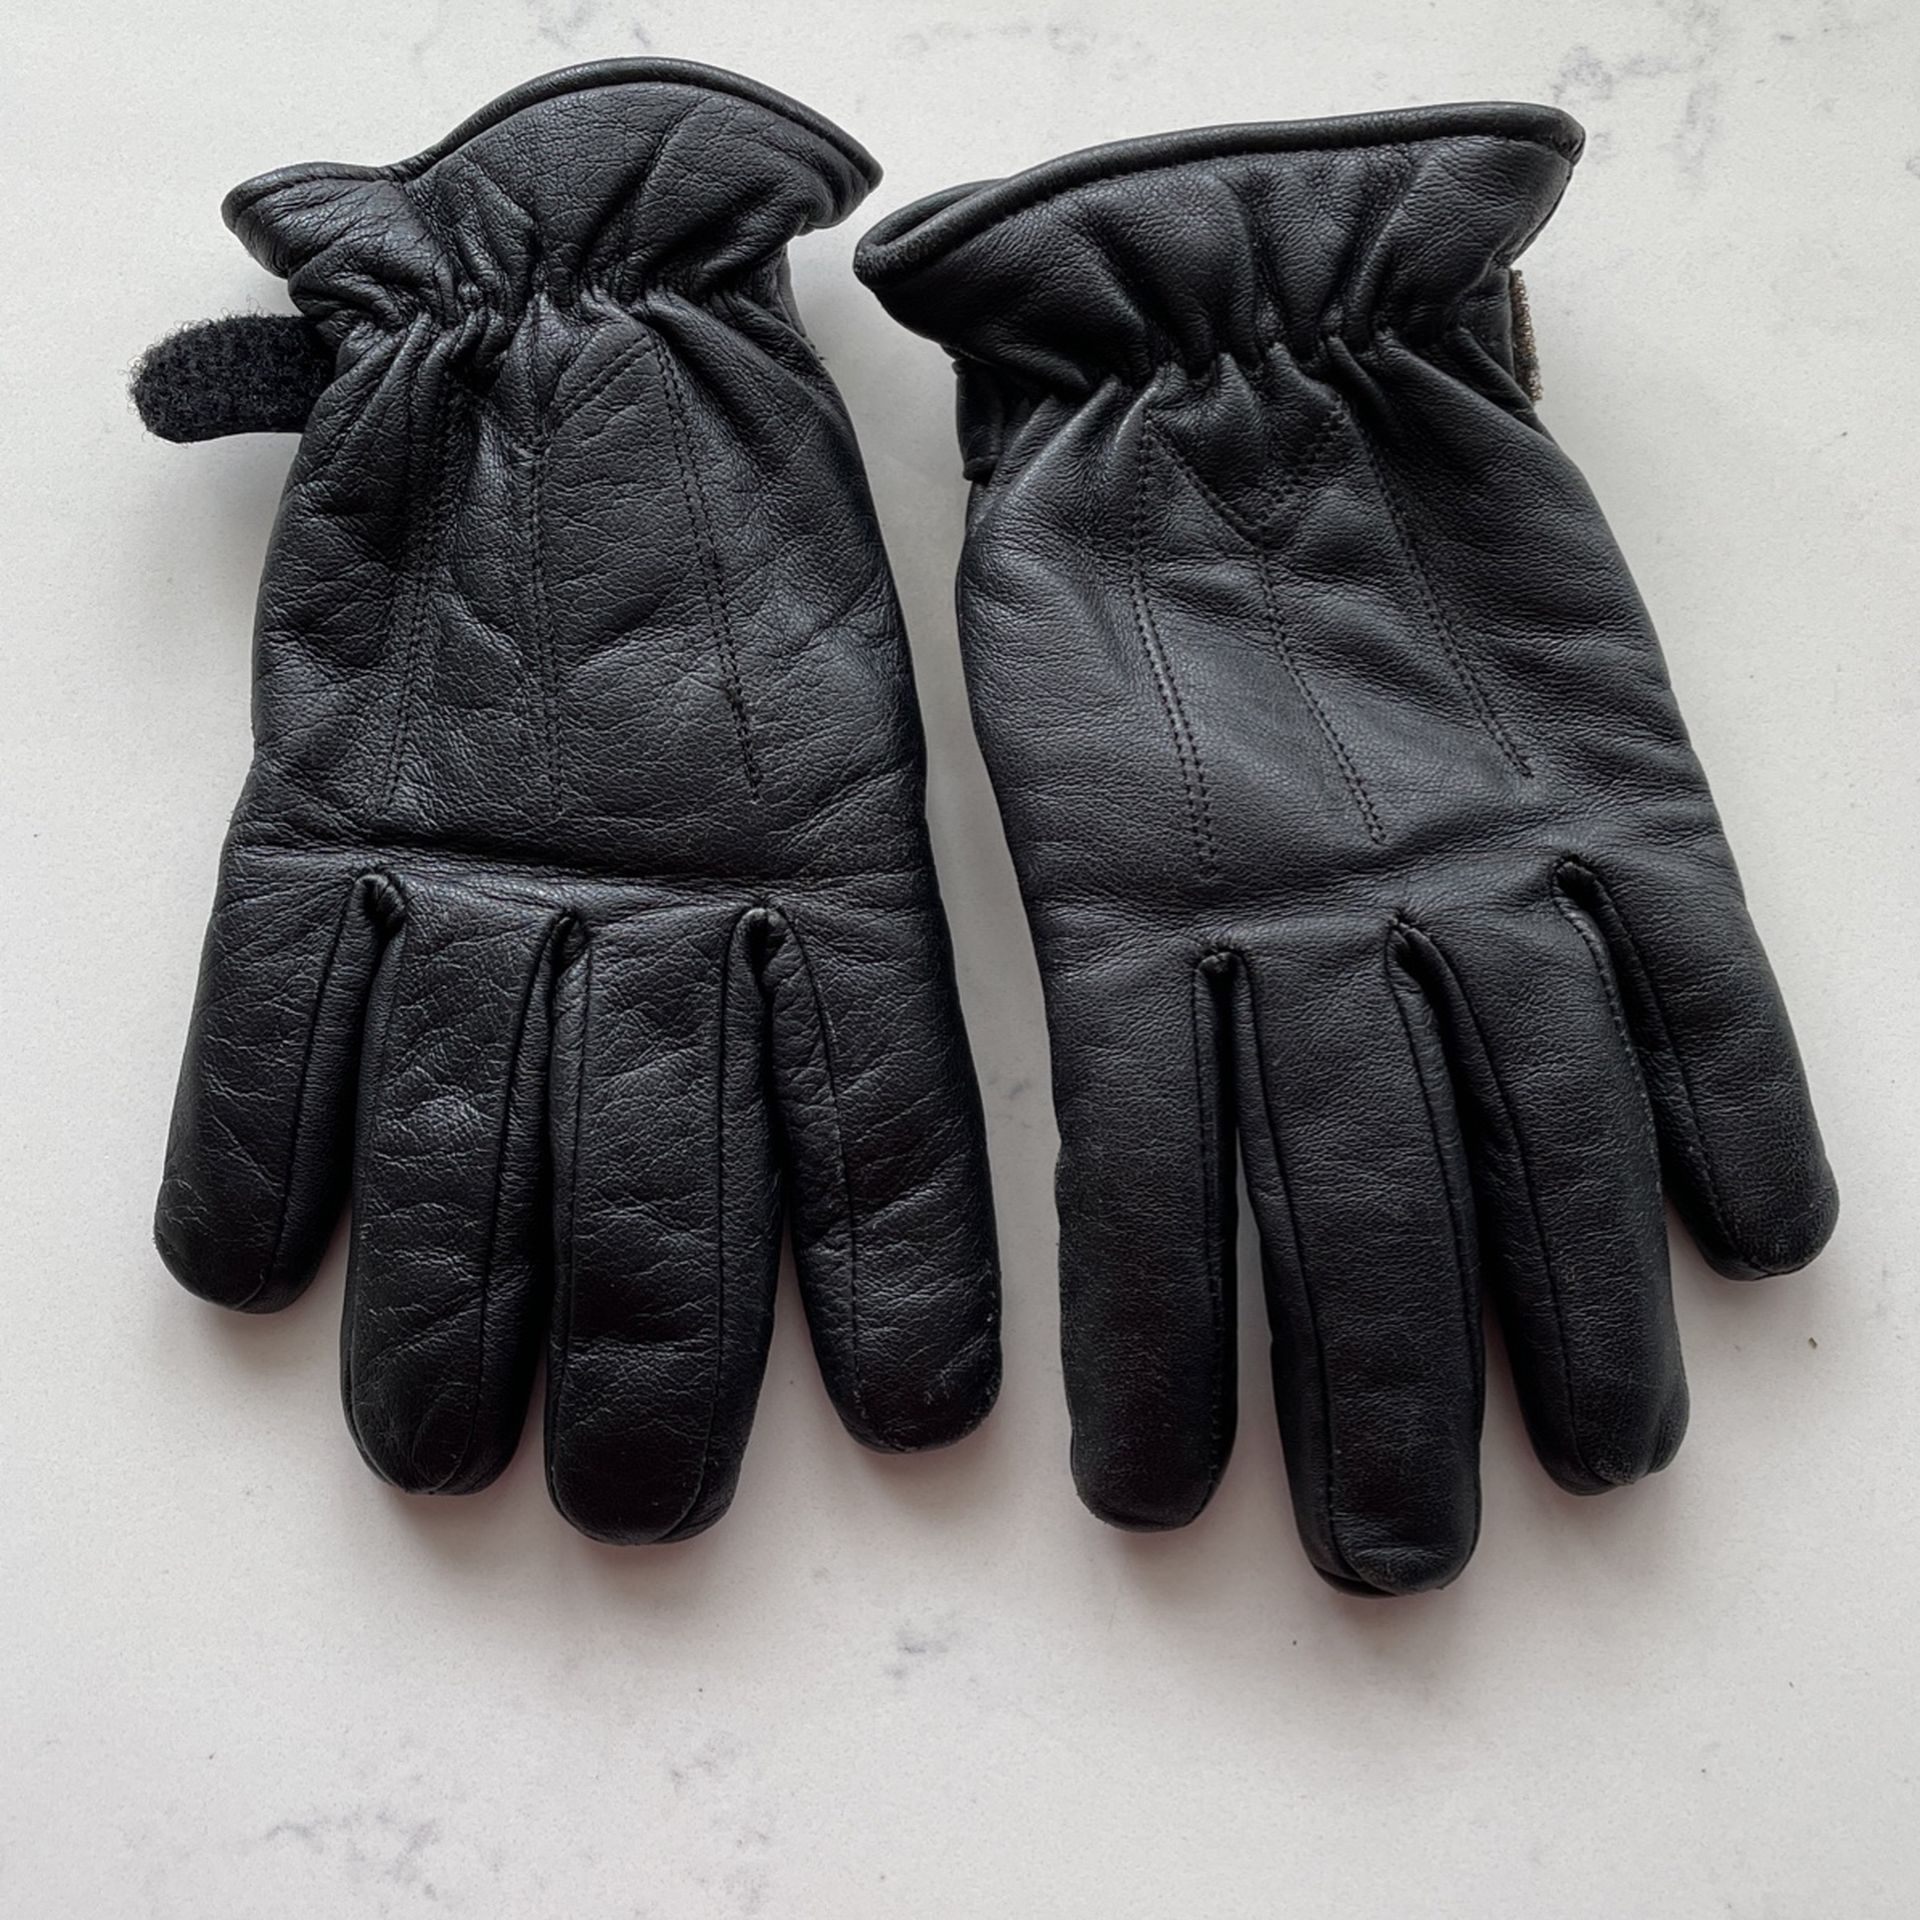 Black Riding Gloves 